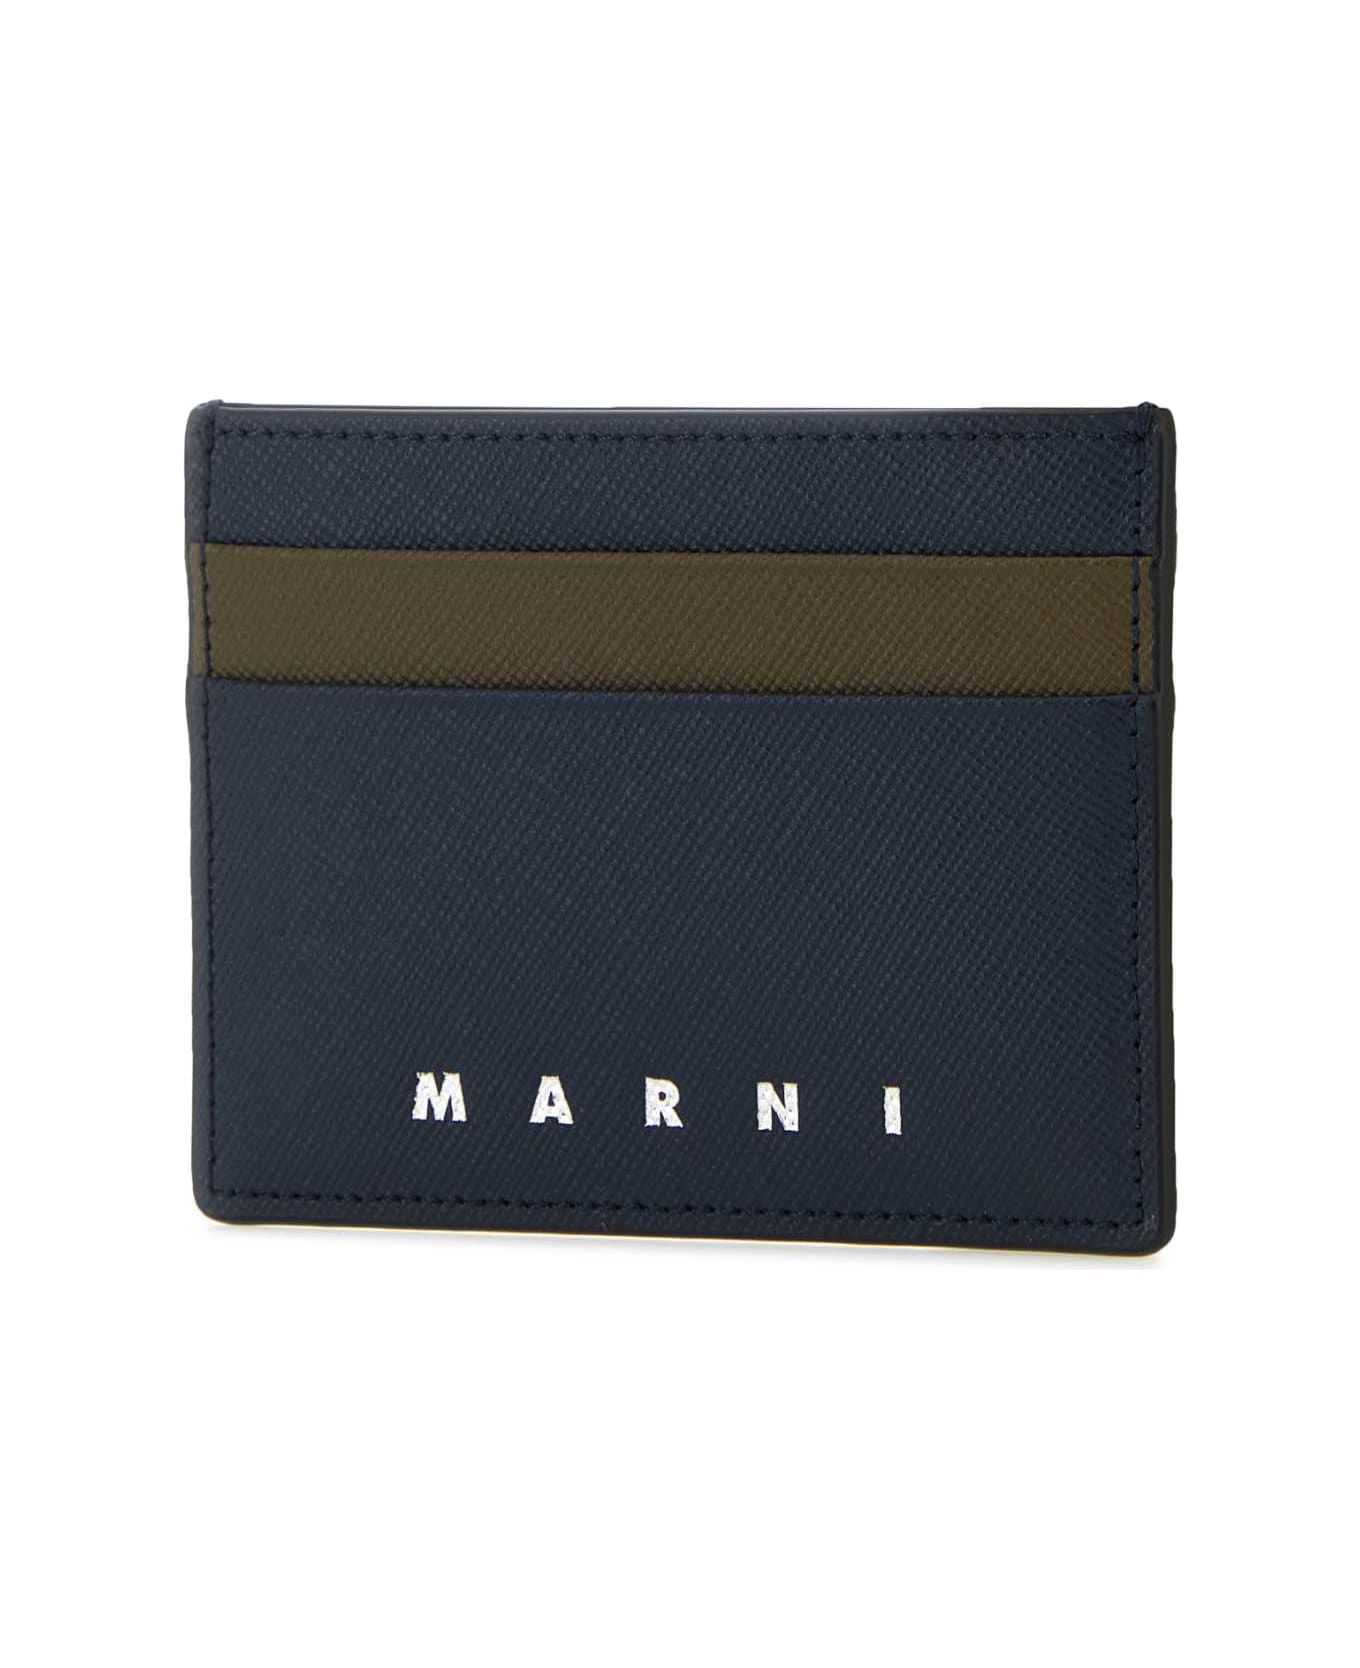 Marni Two-tone Leather Cardholder - NIGHTBLUEDUSTYOLIVE